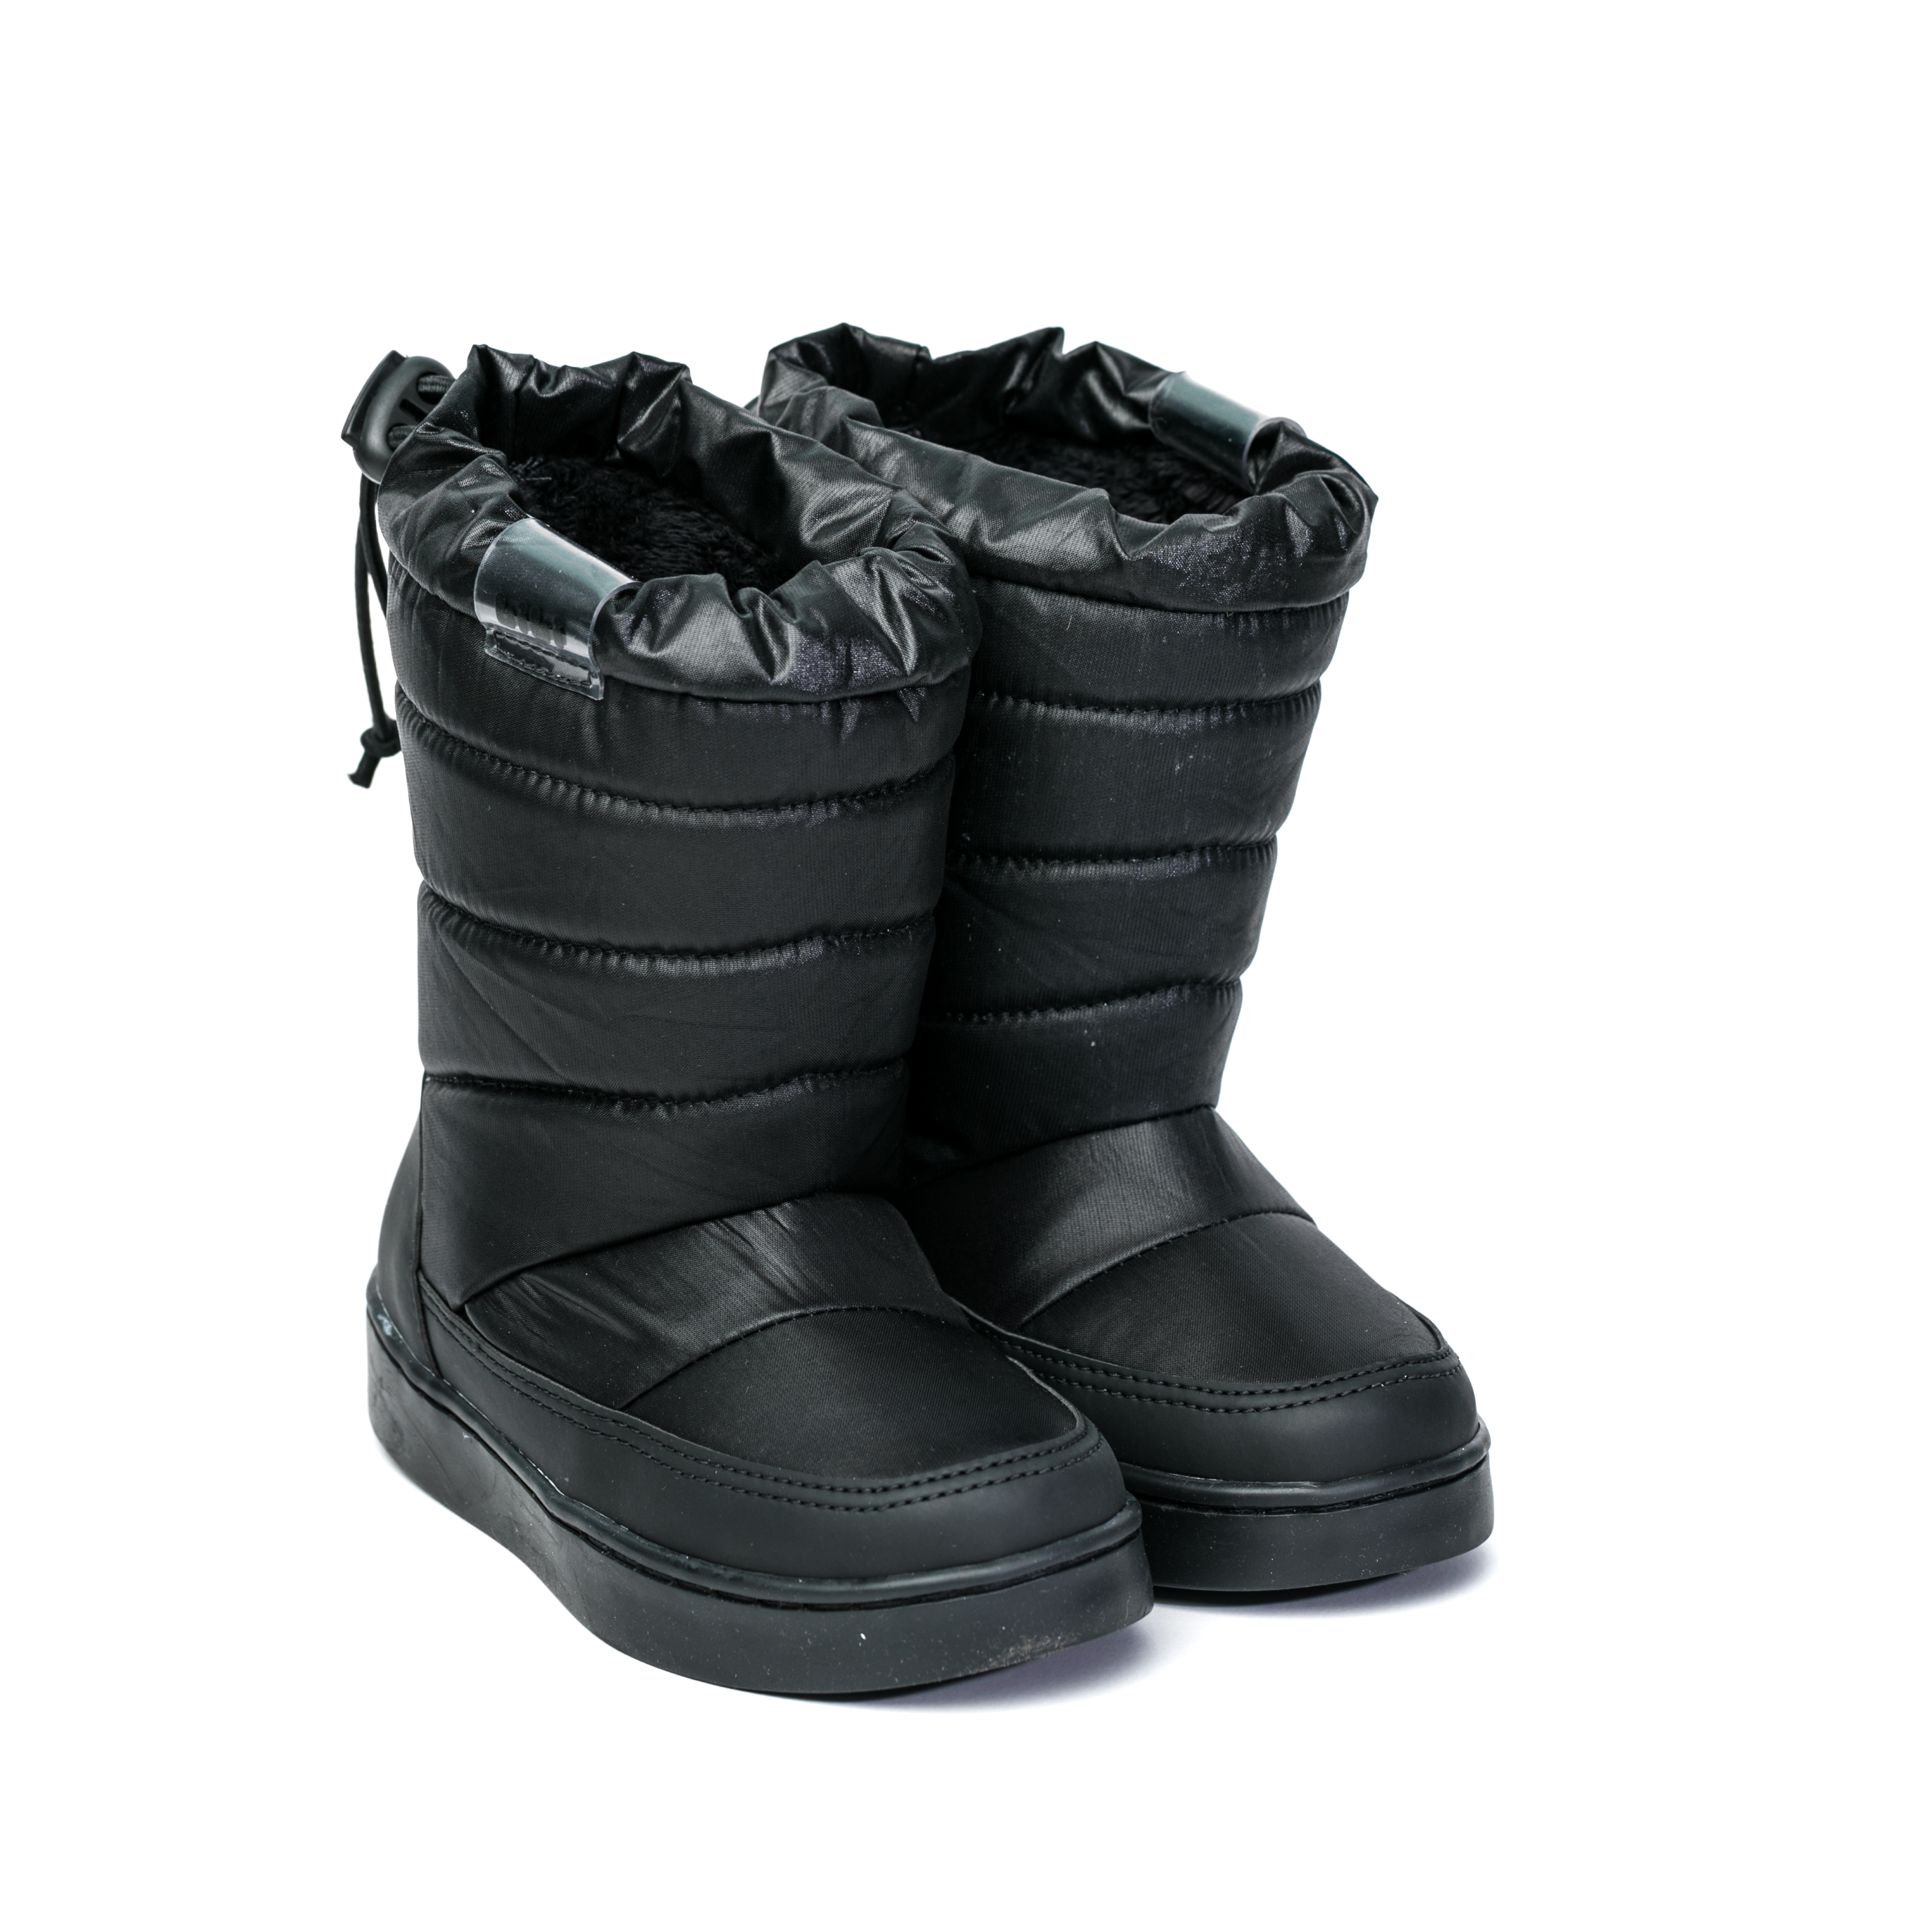 Cizme Unisex Bibi Urban Boots Black Imblanite